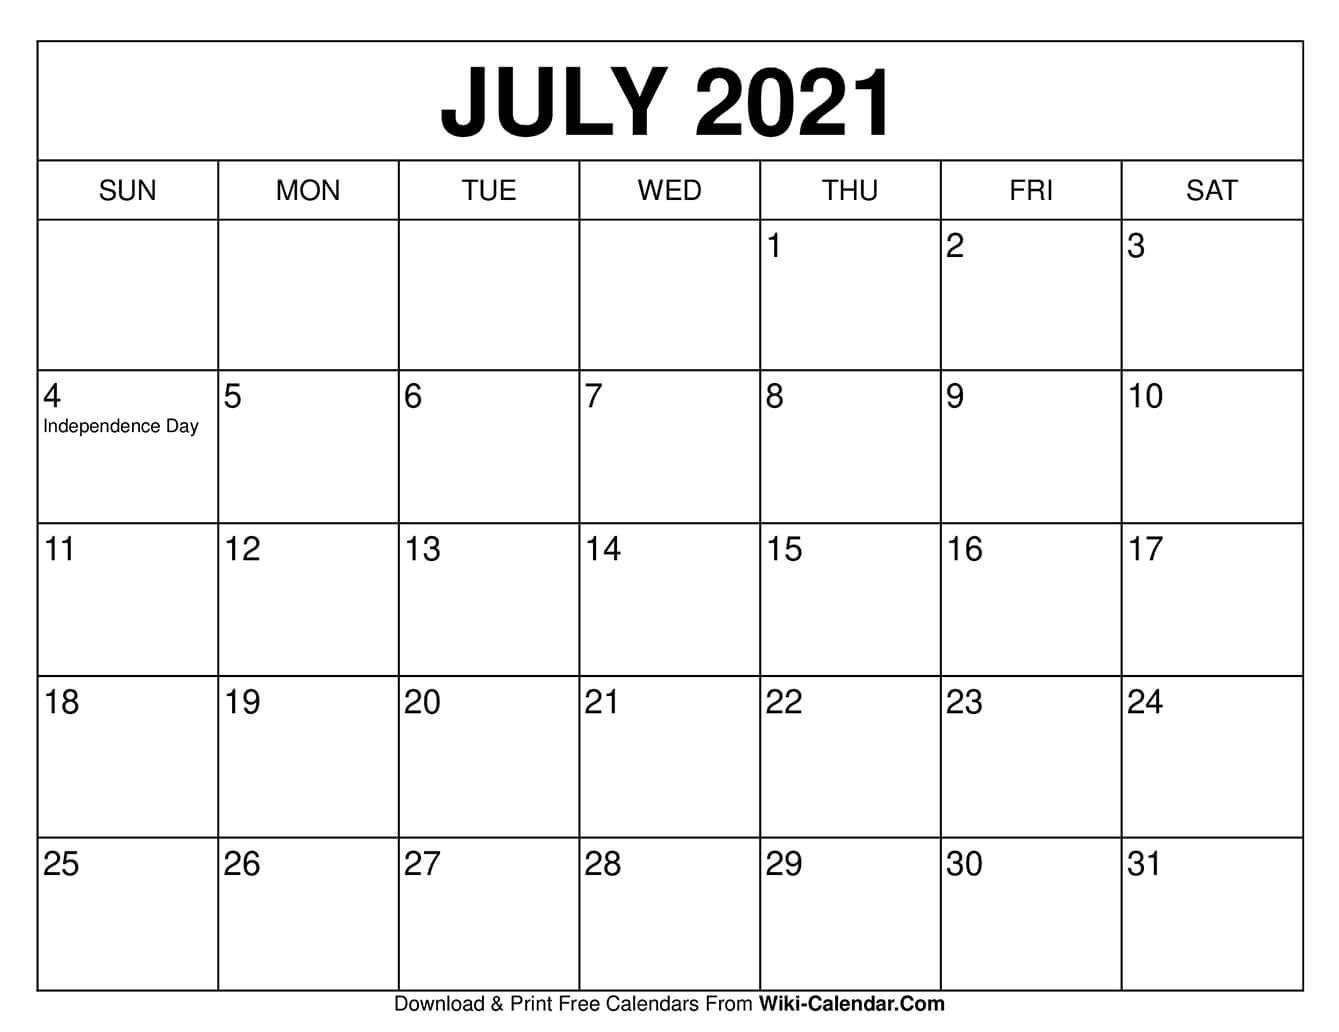 July 2021 Calendar Wallpapers Wallpaper Cave